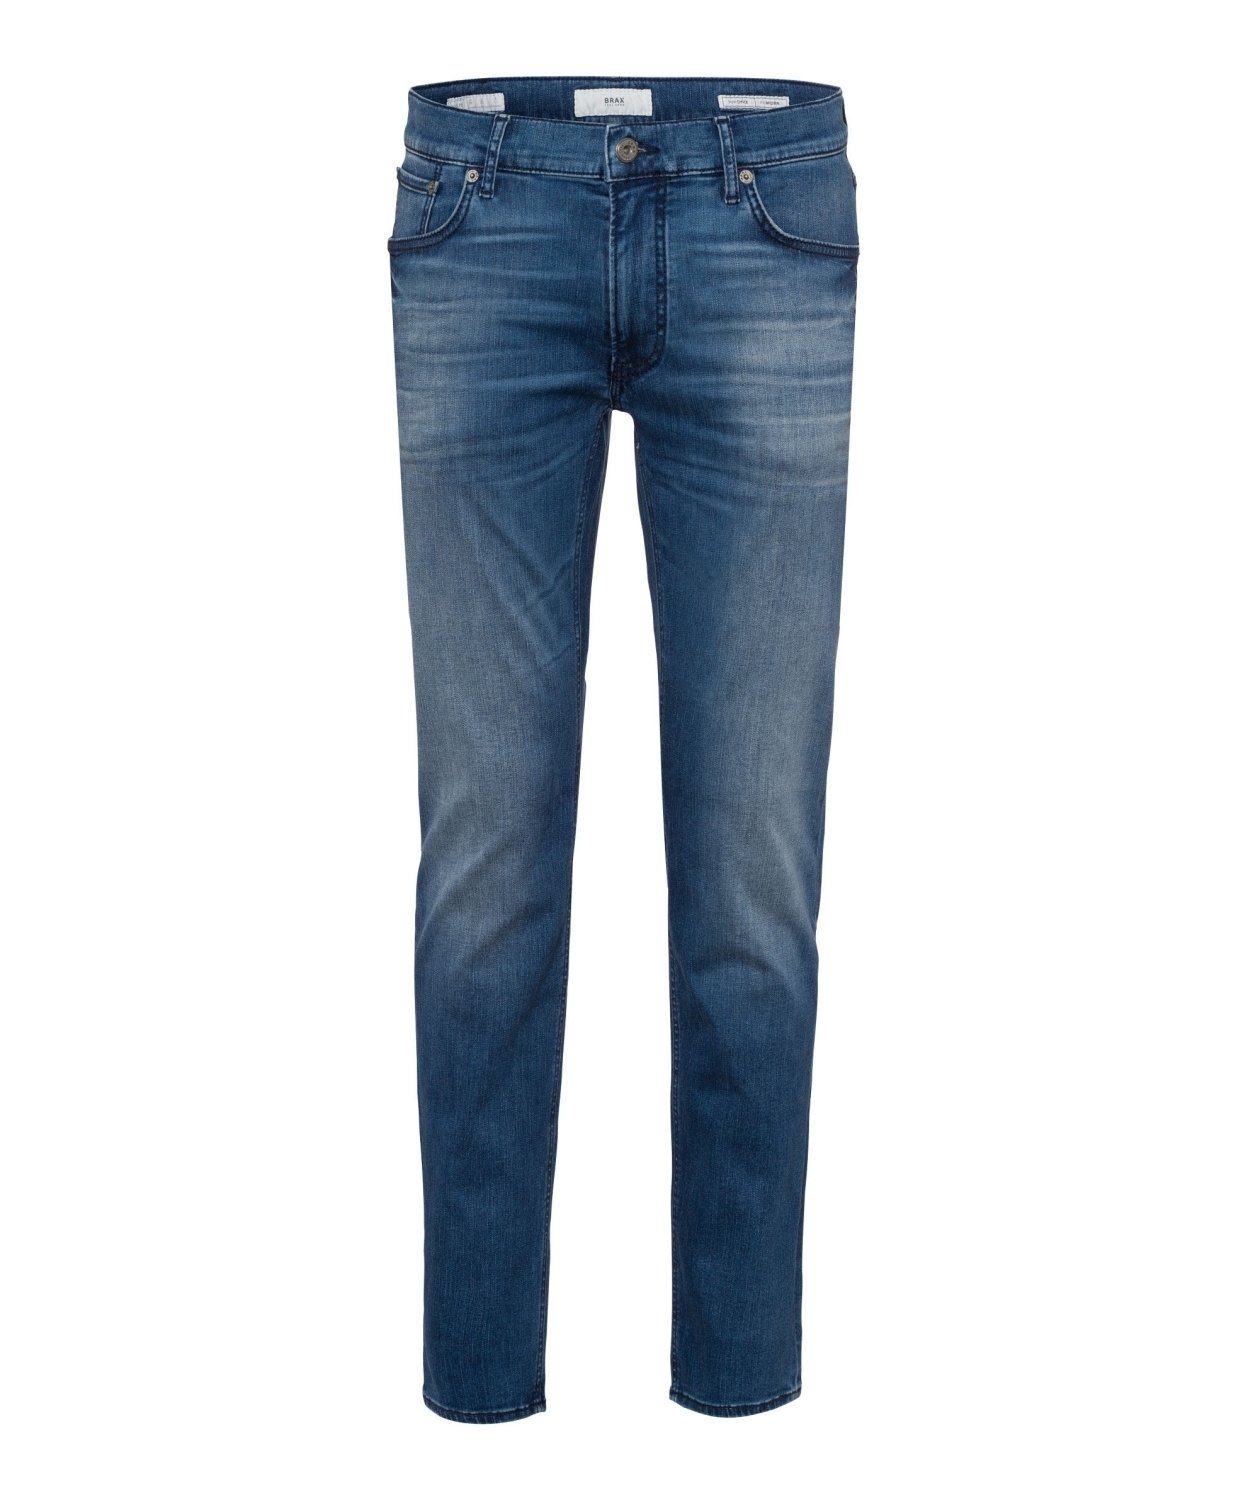 Brax 5-Pocket-Hose Style Chuck Jeans Slim Fit Herren vintage blue used